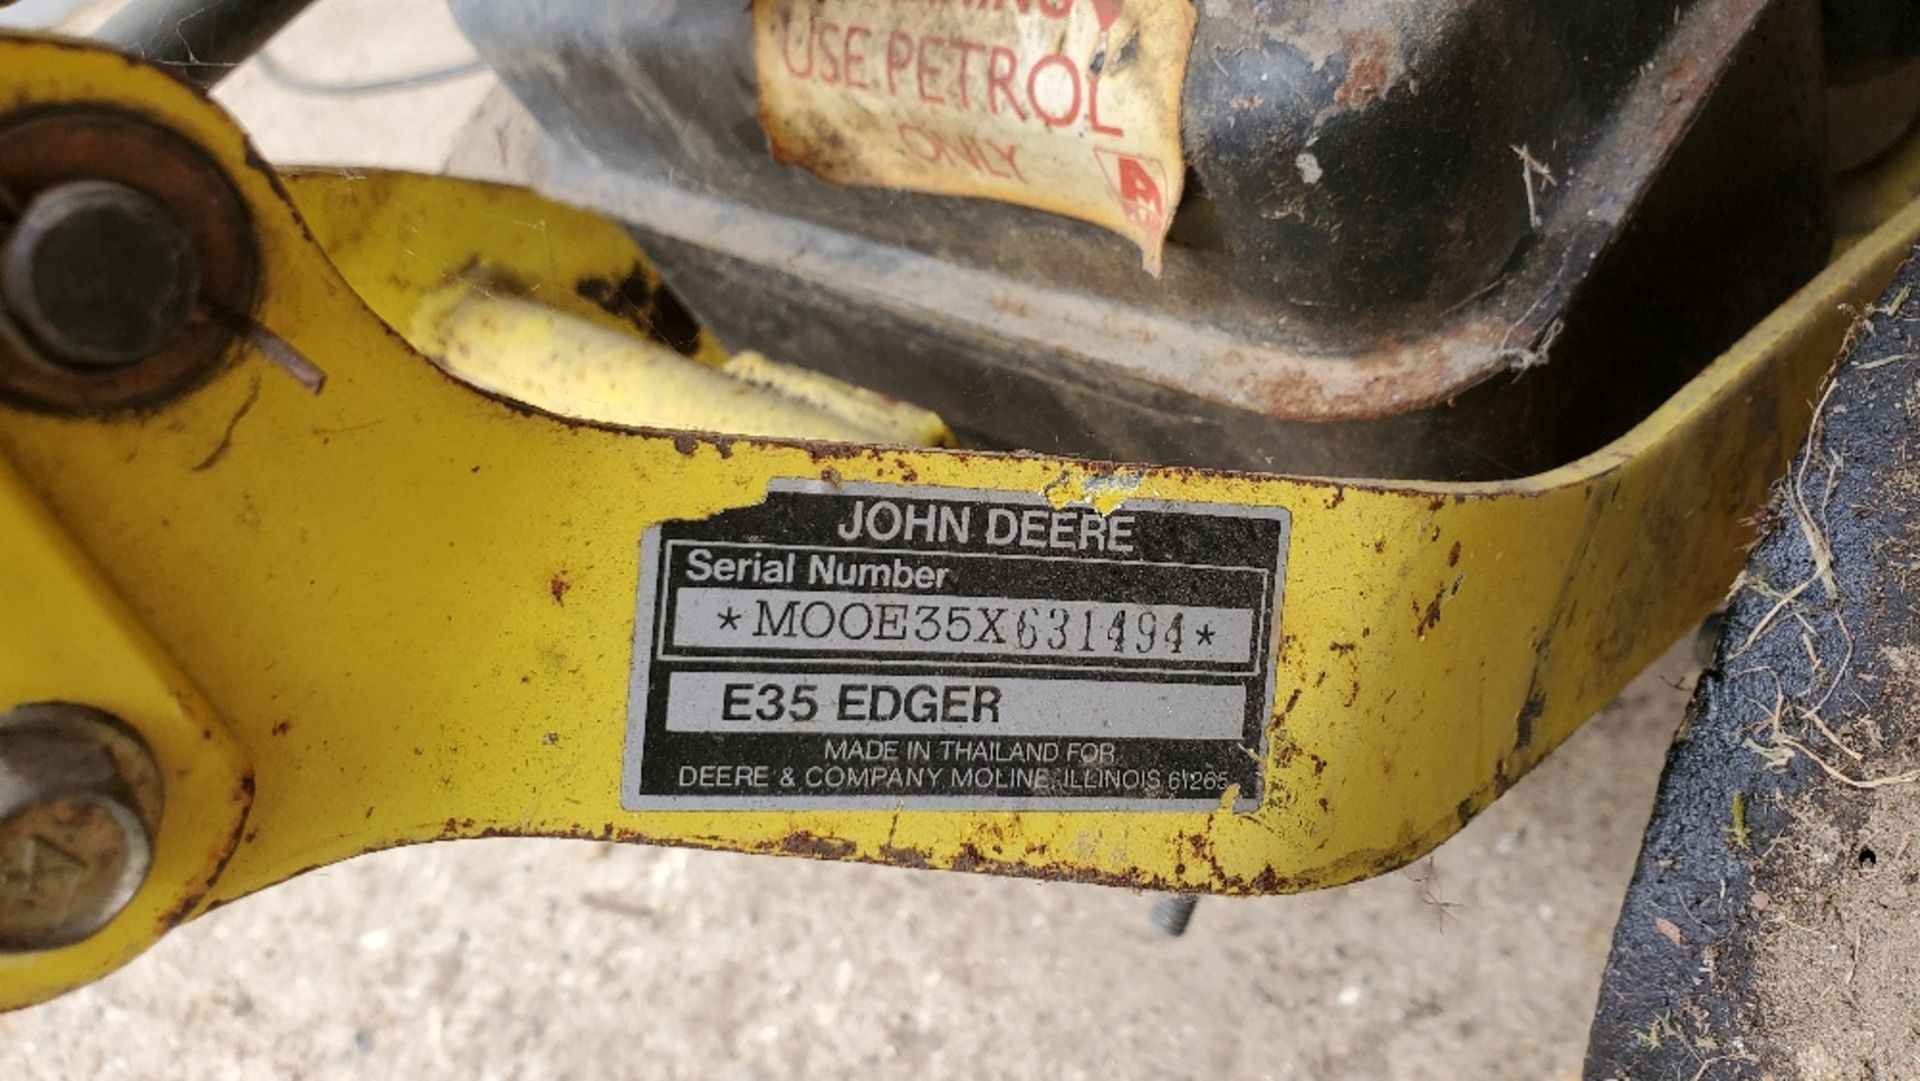 John Deere edger machine, petrol driven, - Image 3 of 6